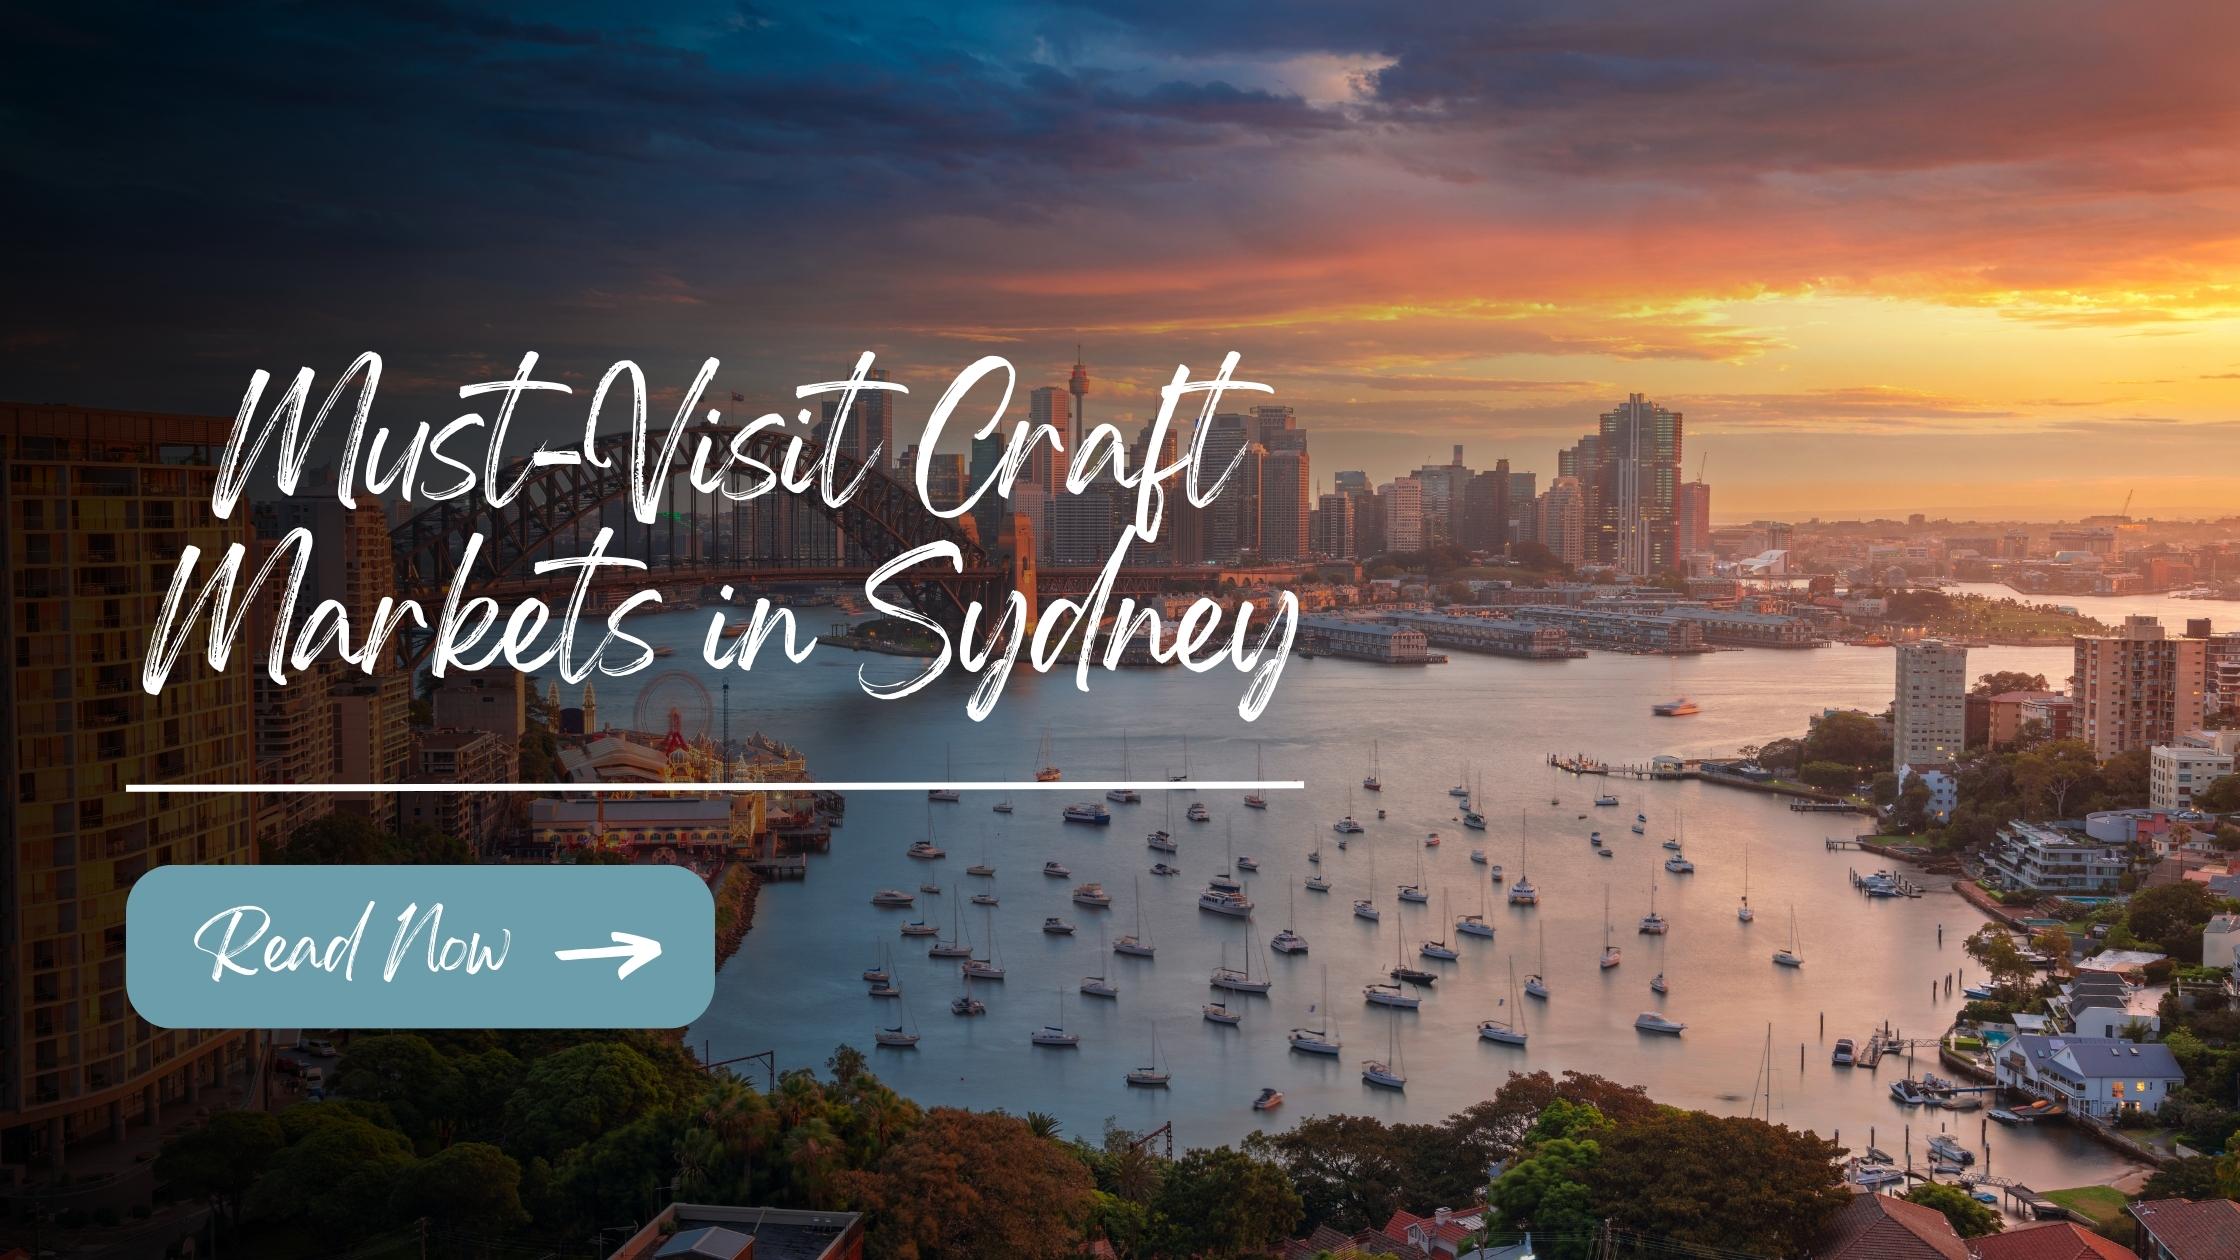 Must-visit craft markets in Sydney